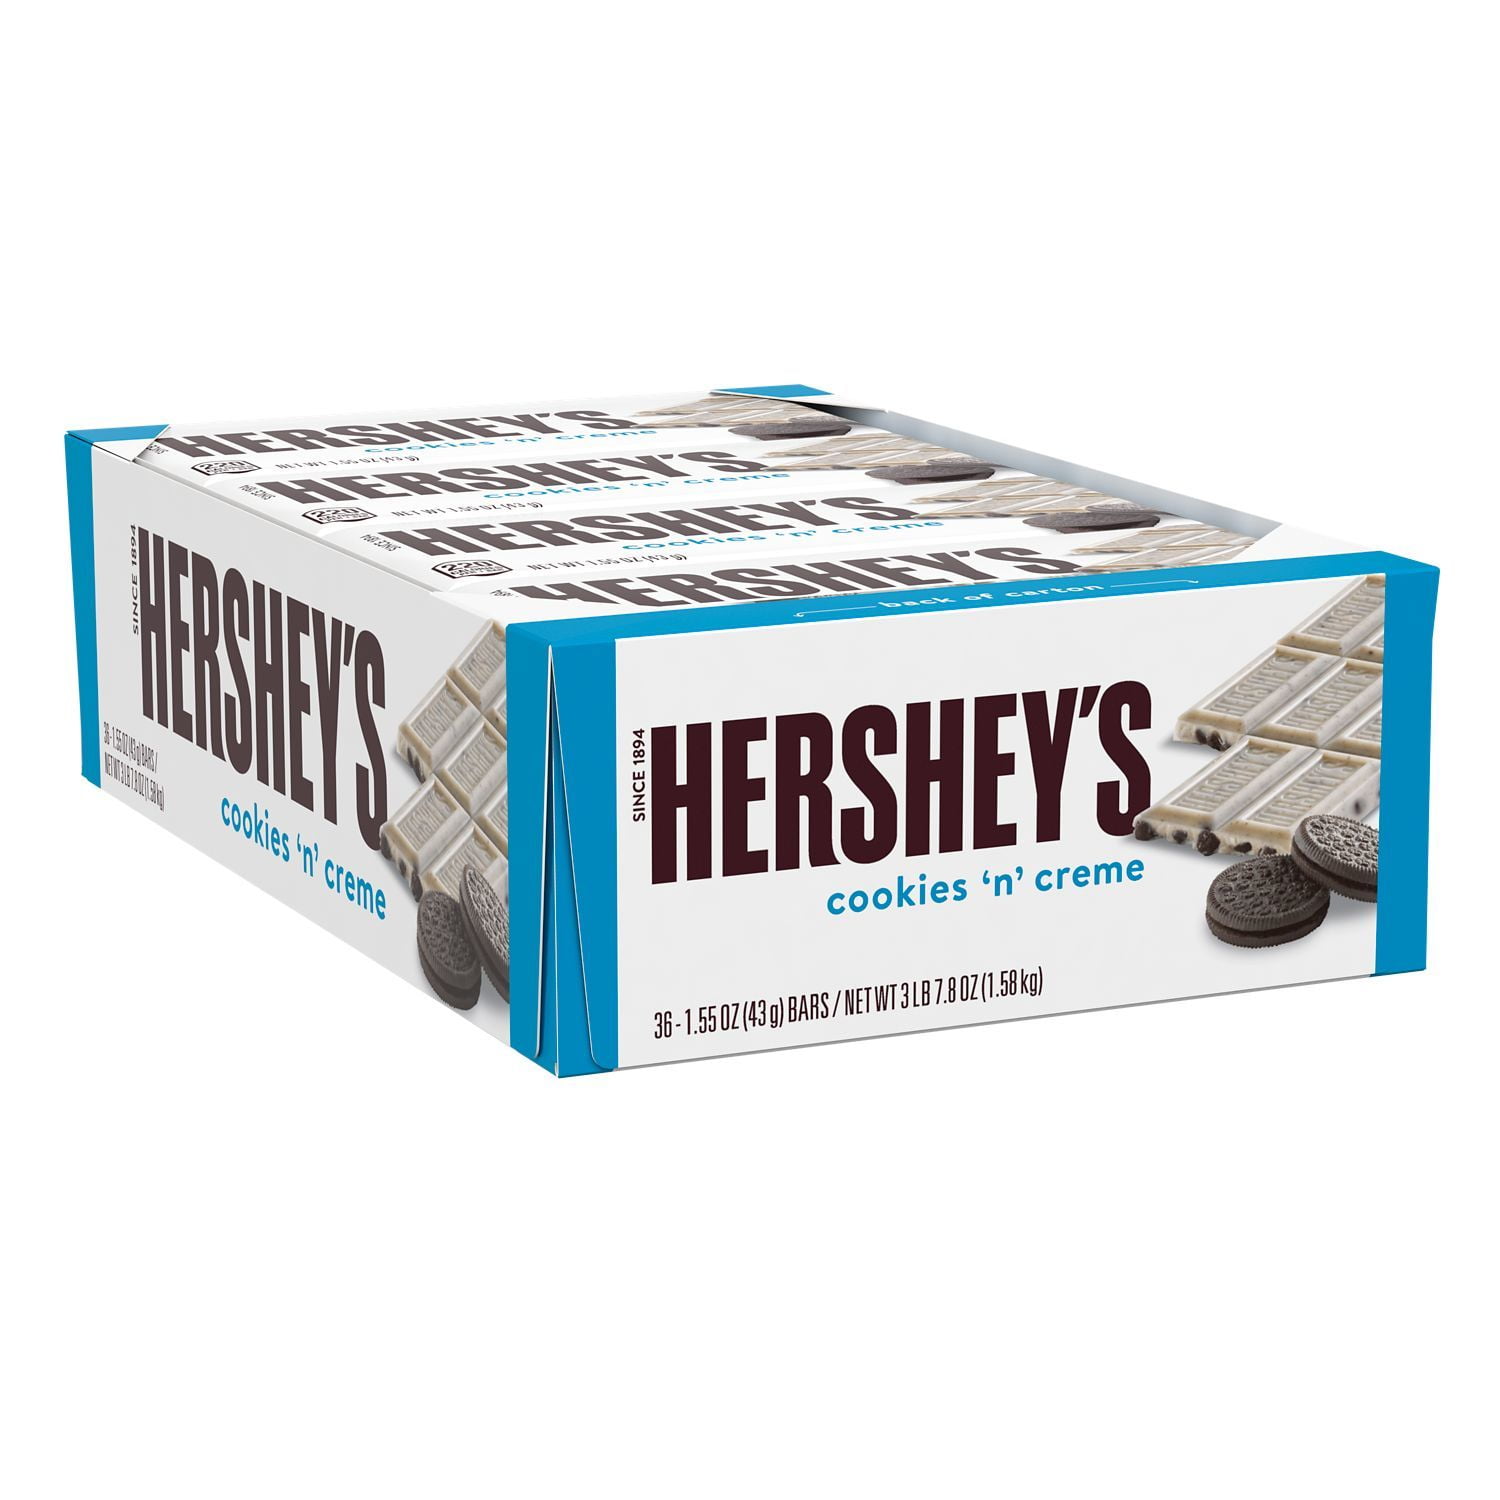 HERSHEY'S, CREME Candy, Individually Wrapped, oz, Bars (36 ct) Walmart.com